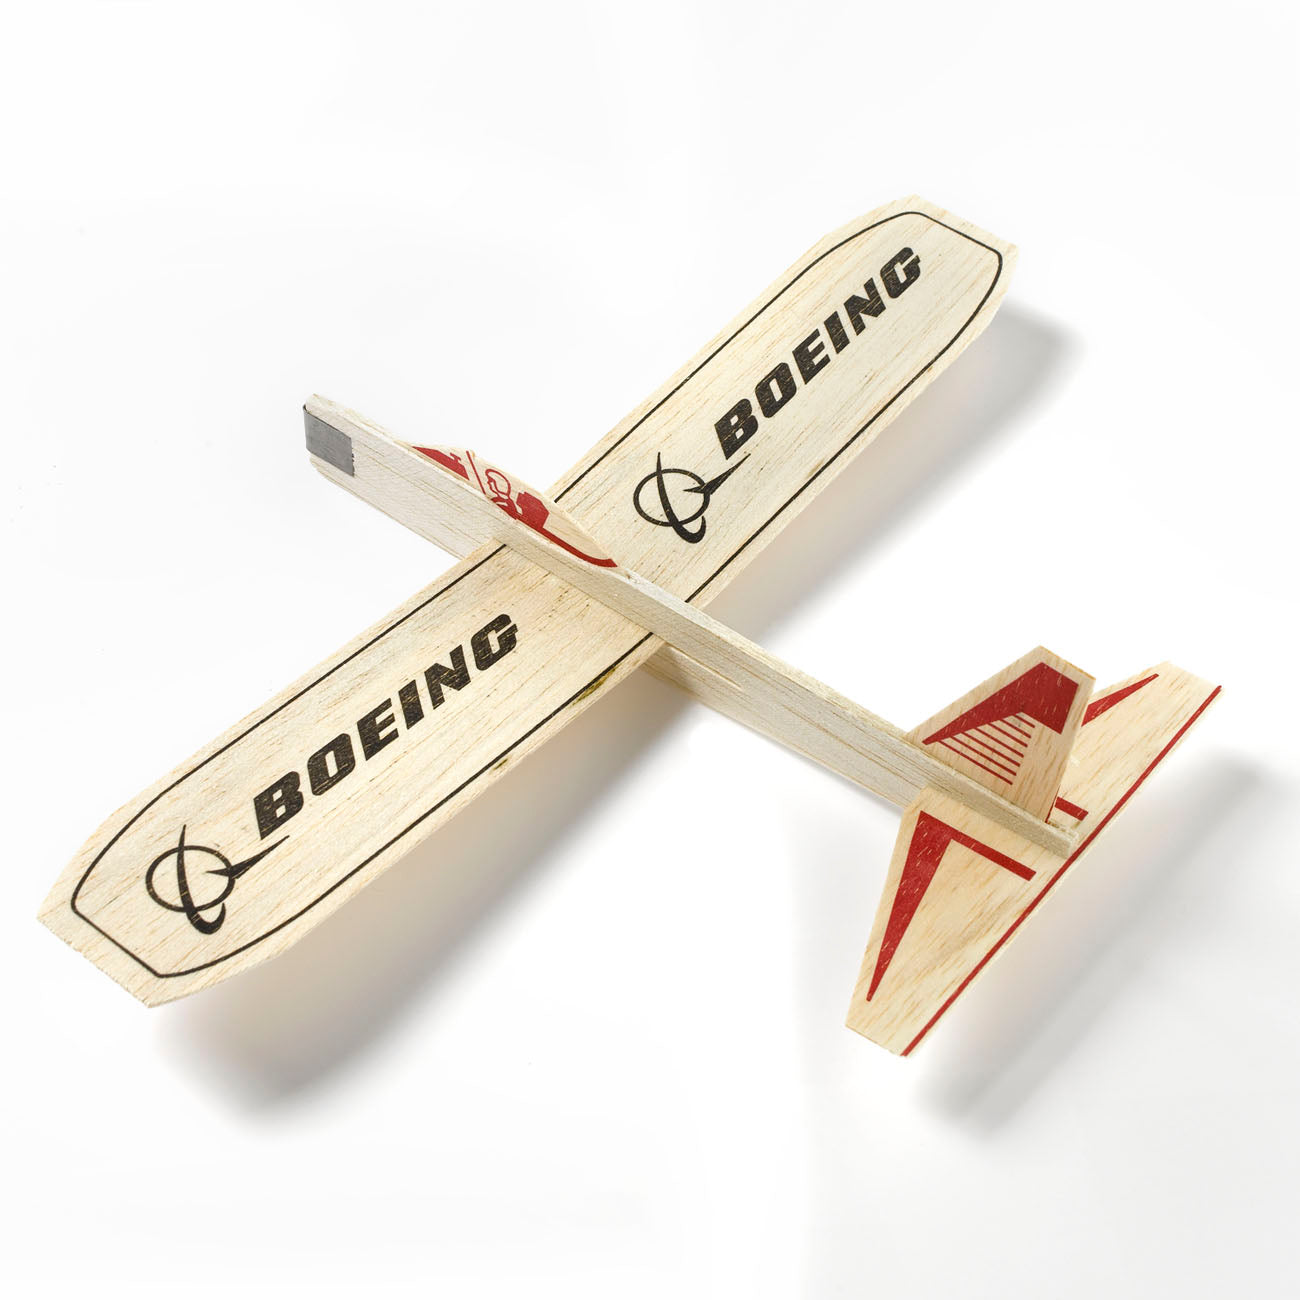 Boeing Balsa Wood Glider - Large (6403277062)